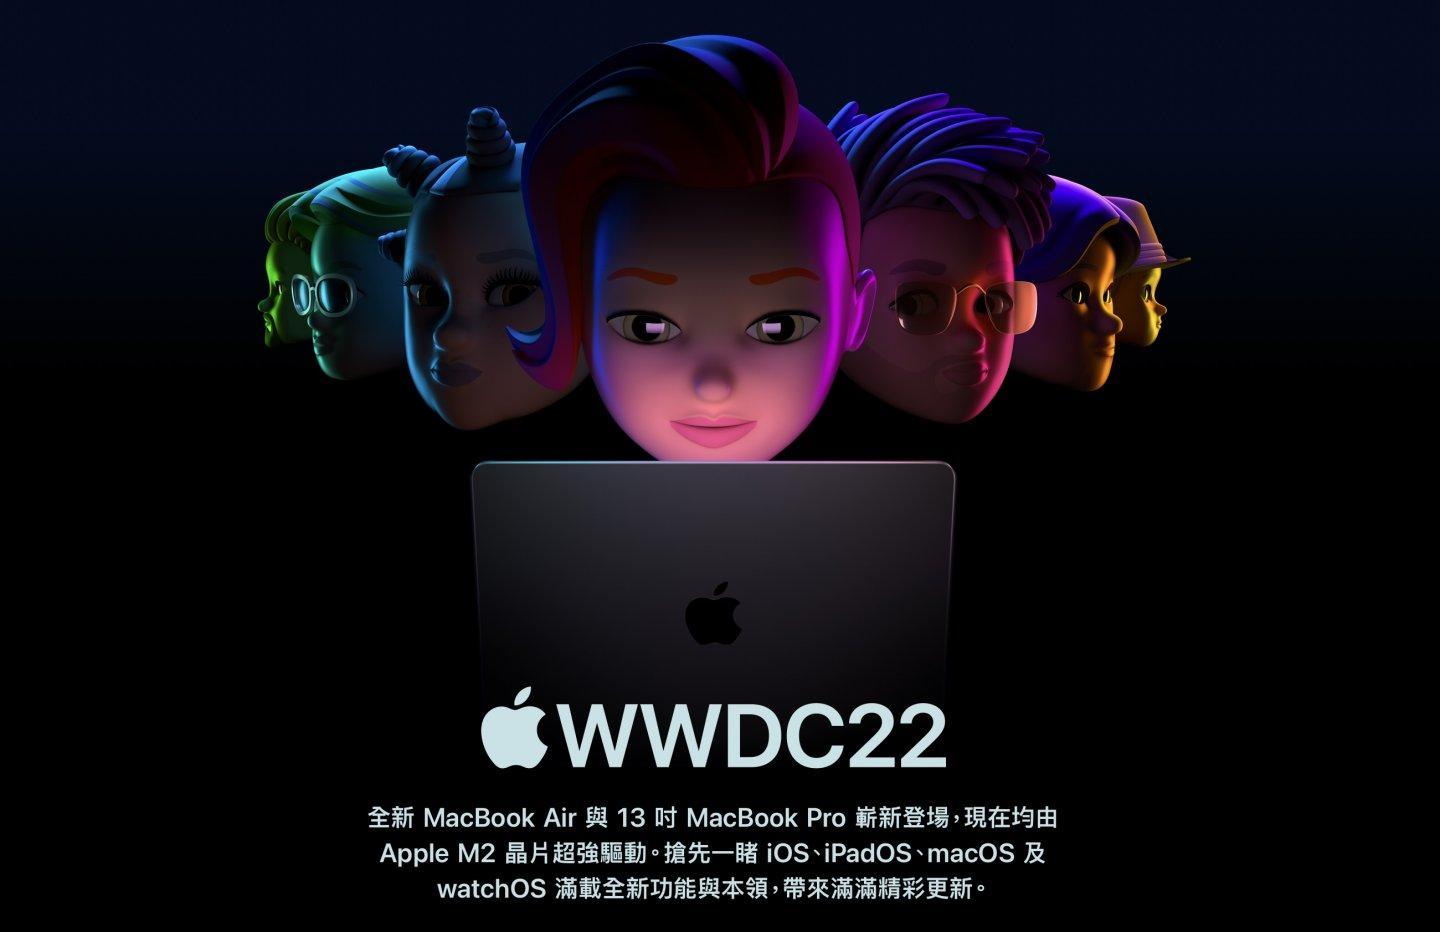 【Apple WWDC 2022】精華重點，來看看這次有那些改變